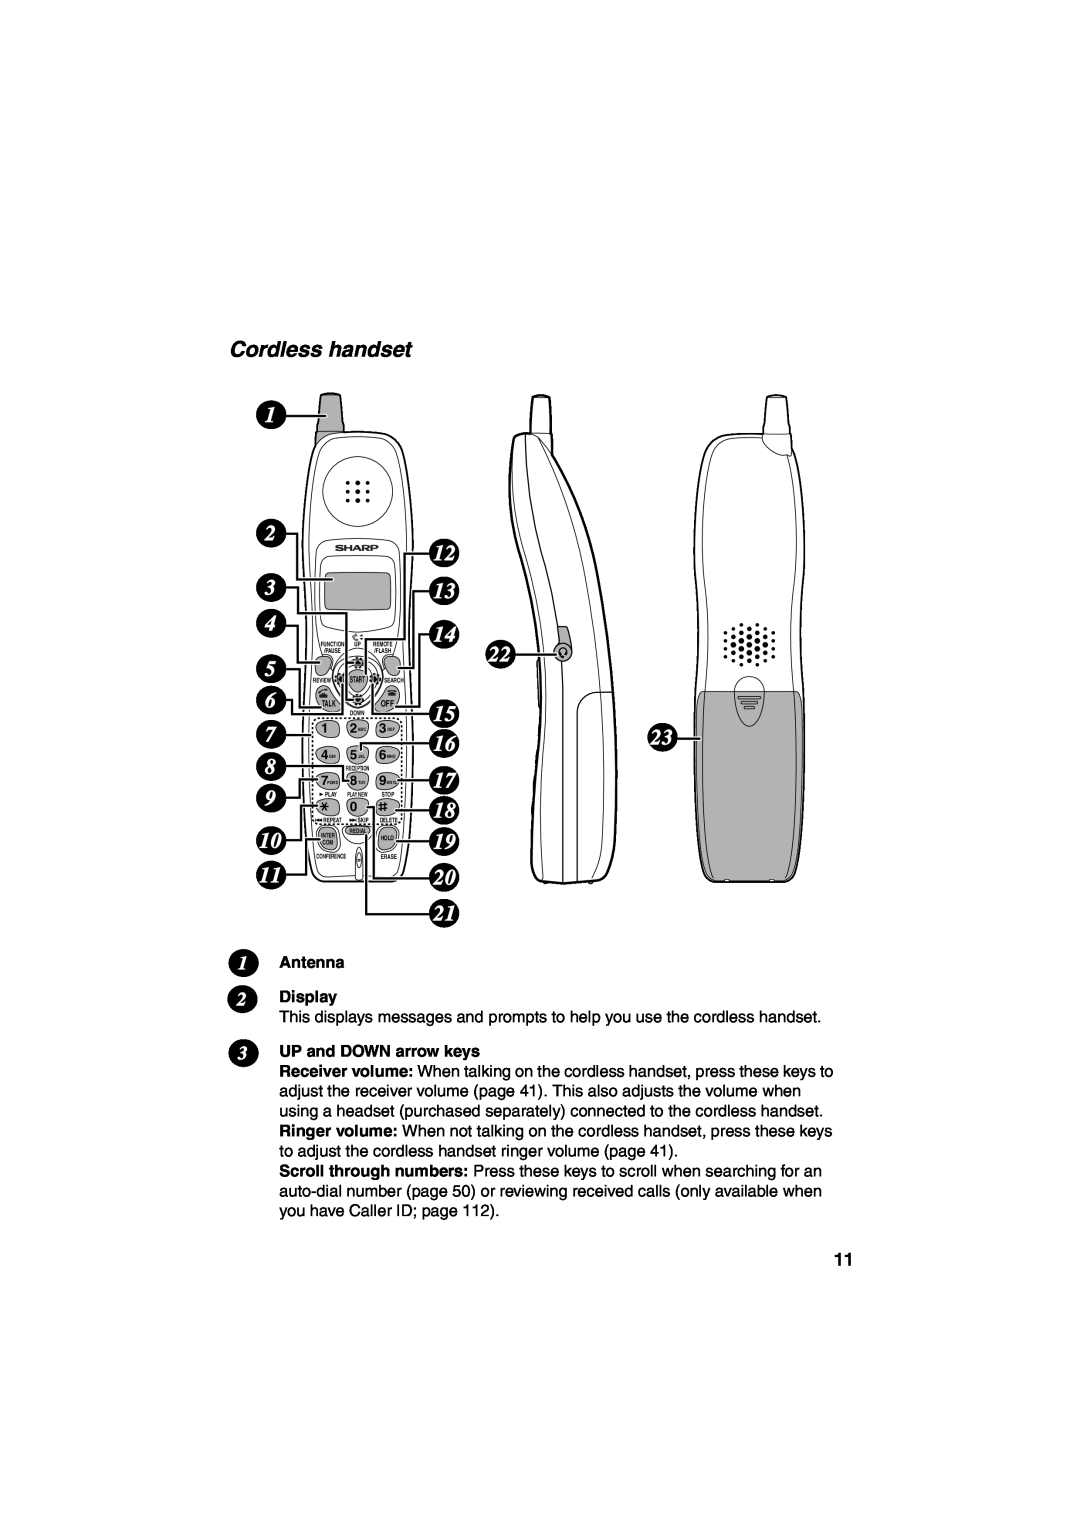 Sharp UX-CD600 operation manual Cordless handset, Antenna 2 Display, UP and DOWN arrow keys 